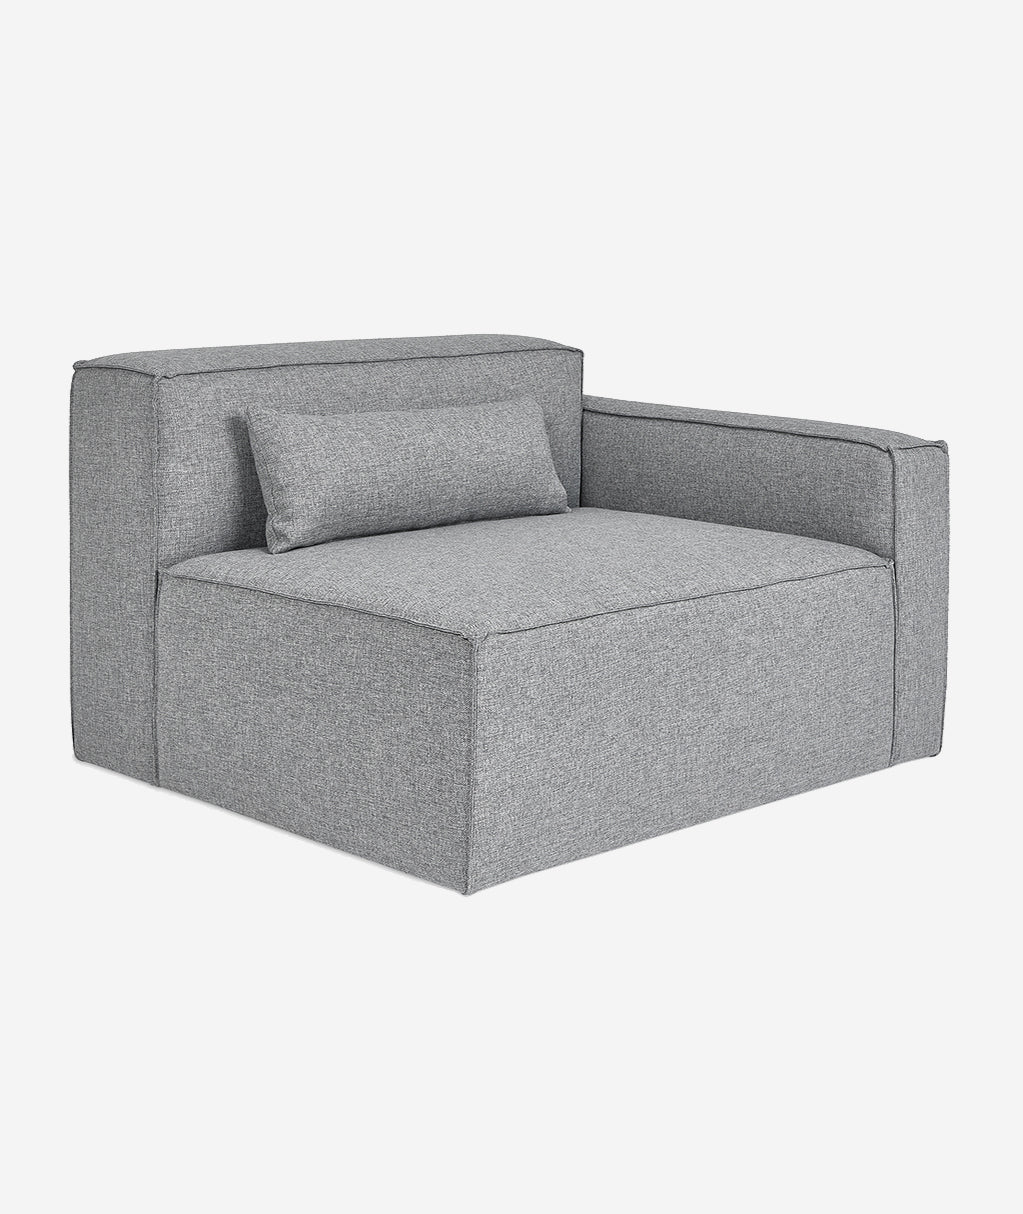 Mix Modular Right Armchair - 4 Colors Gus* Modern - BEAM // Design Store